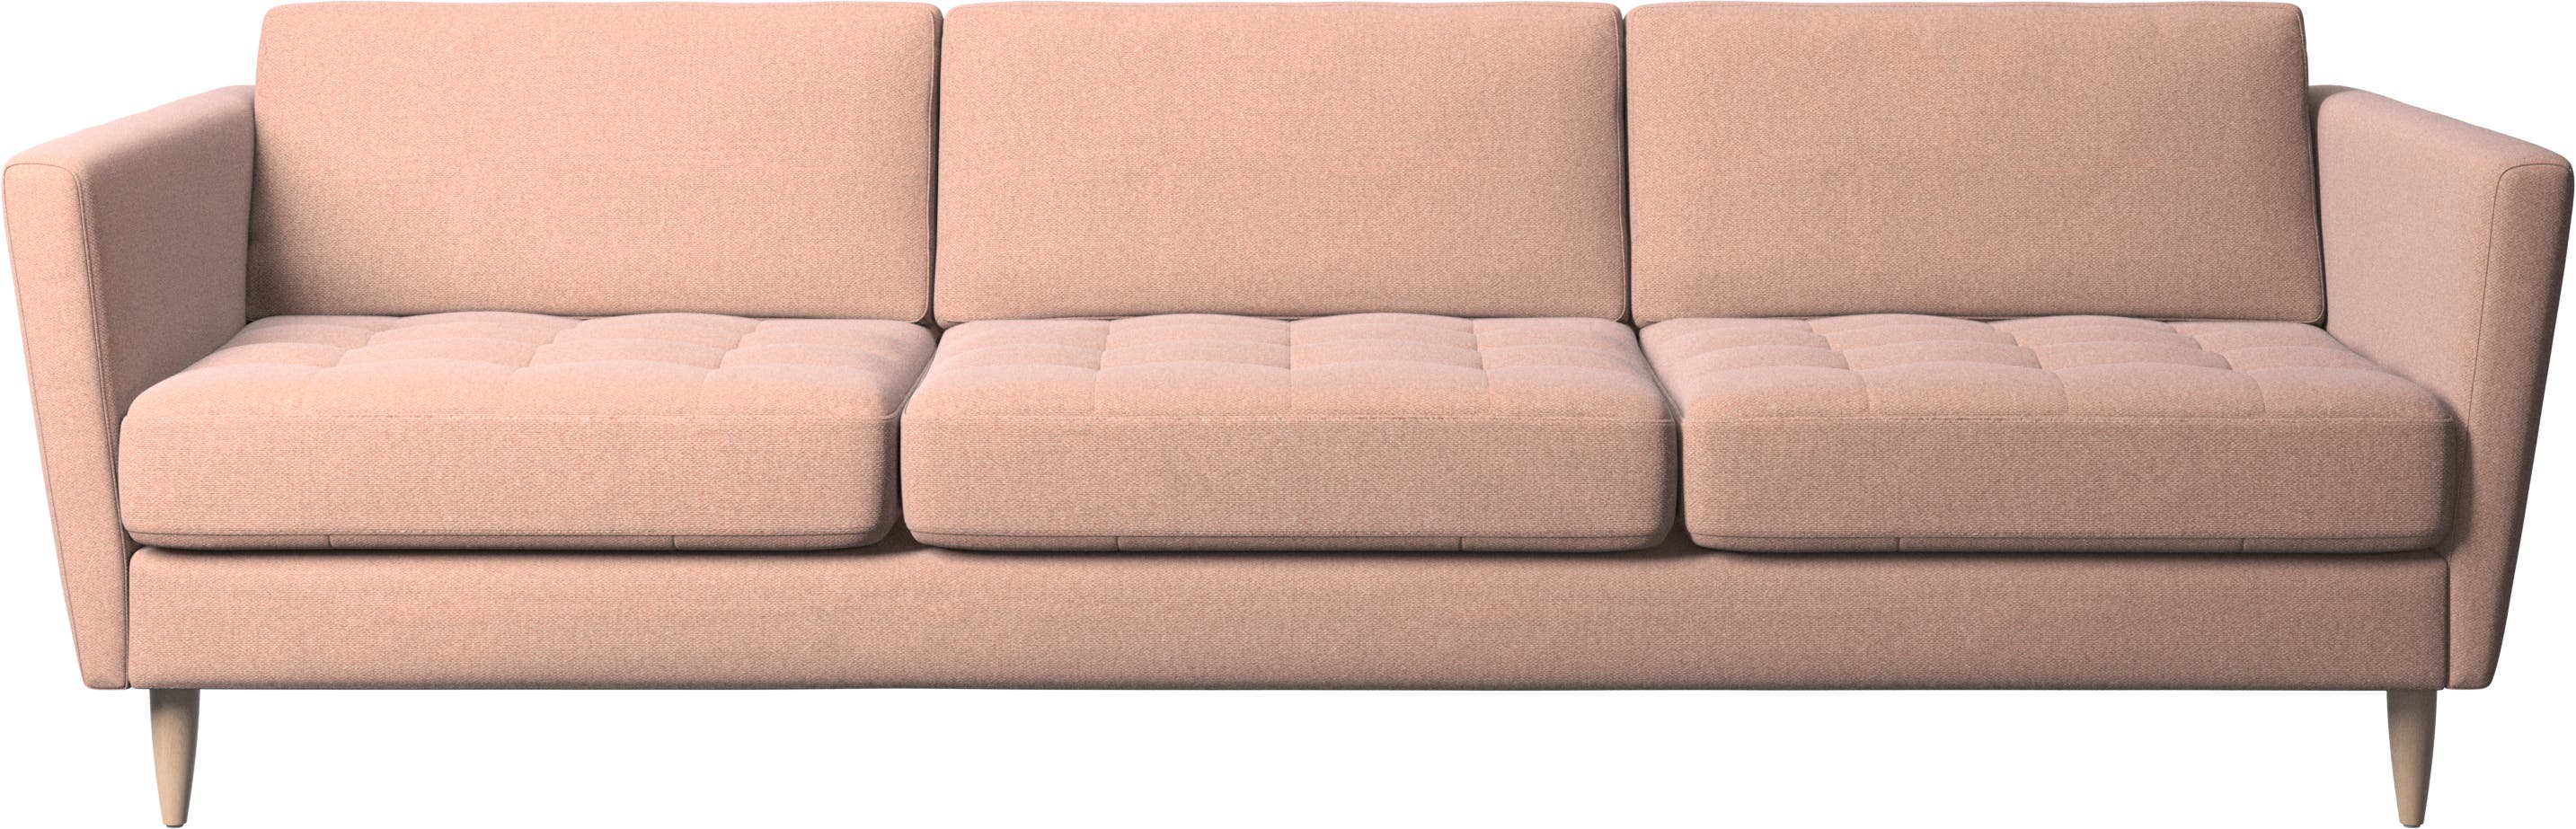 Osaka Sofa, getuftete Sitzfläche